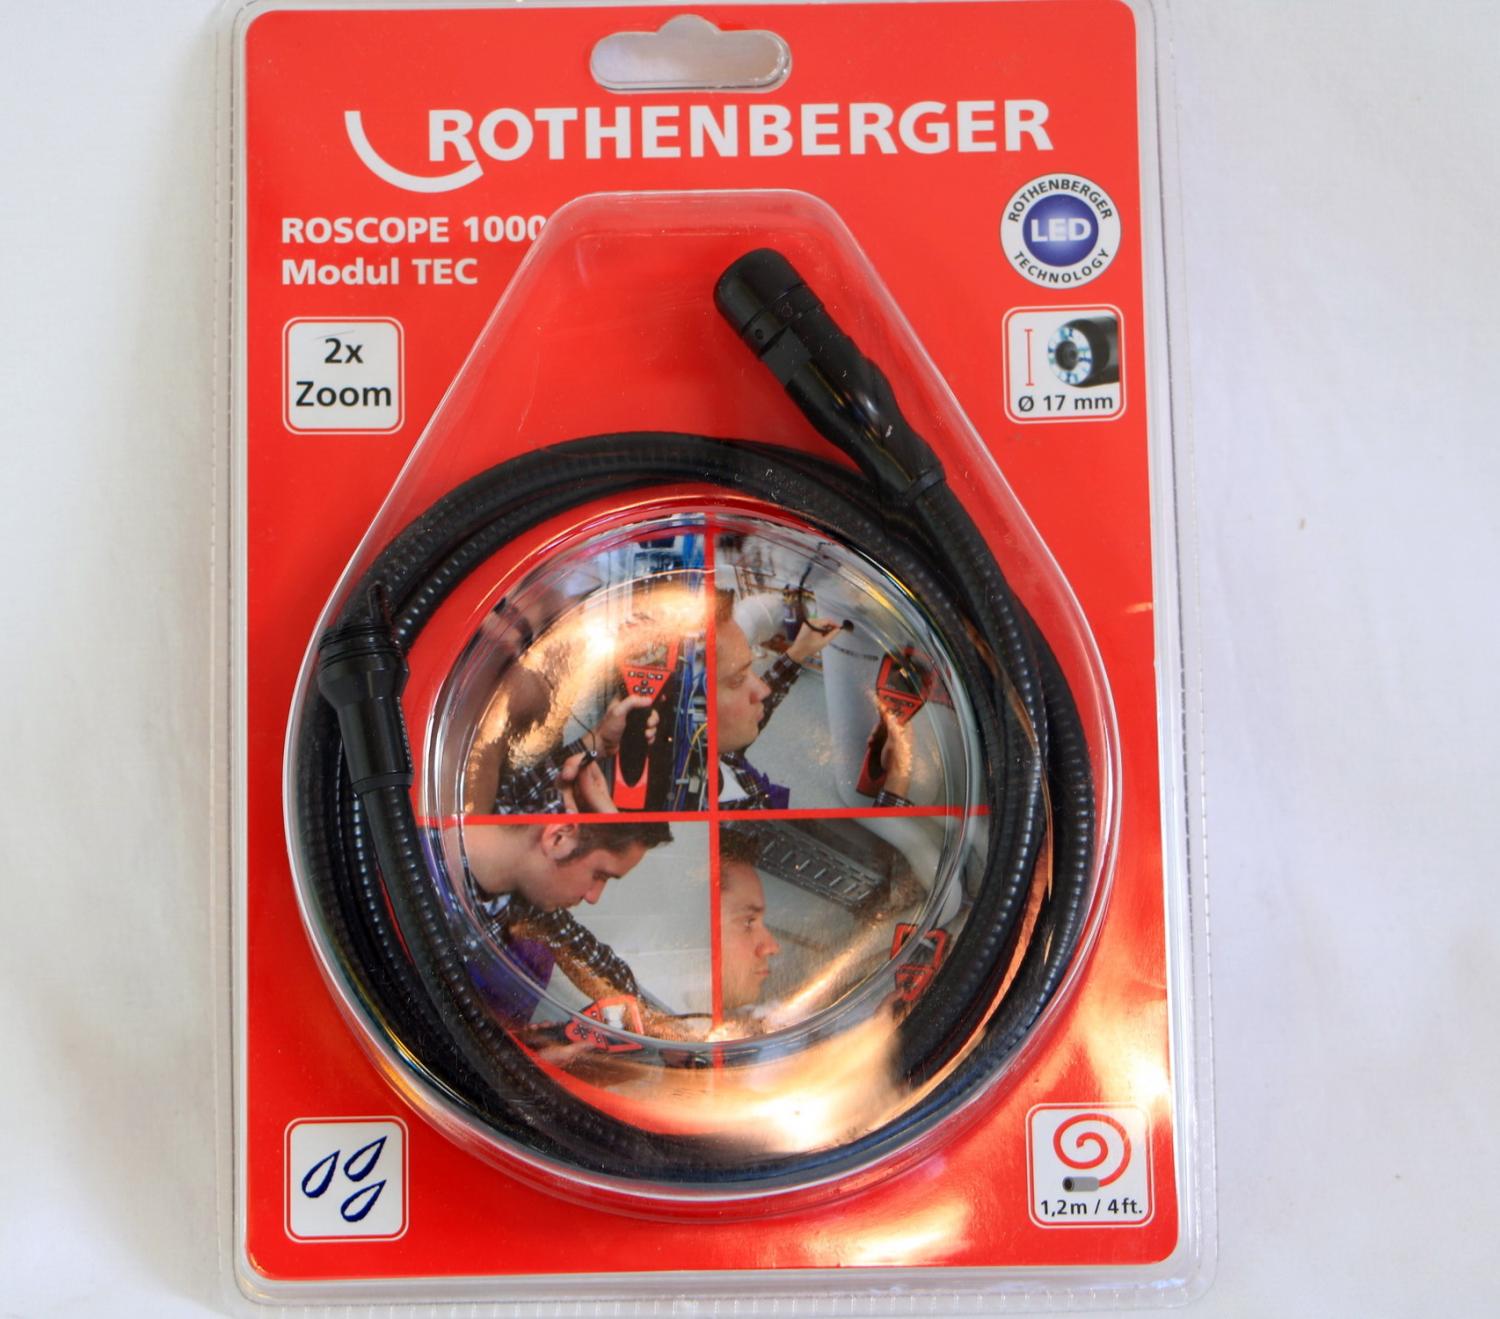 Rothenberger Inspektionsmodul TEC Kamerakopf für Roscope i 1000 2000 69601